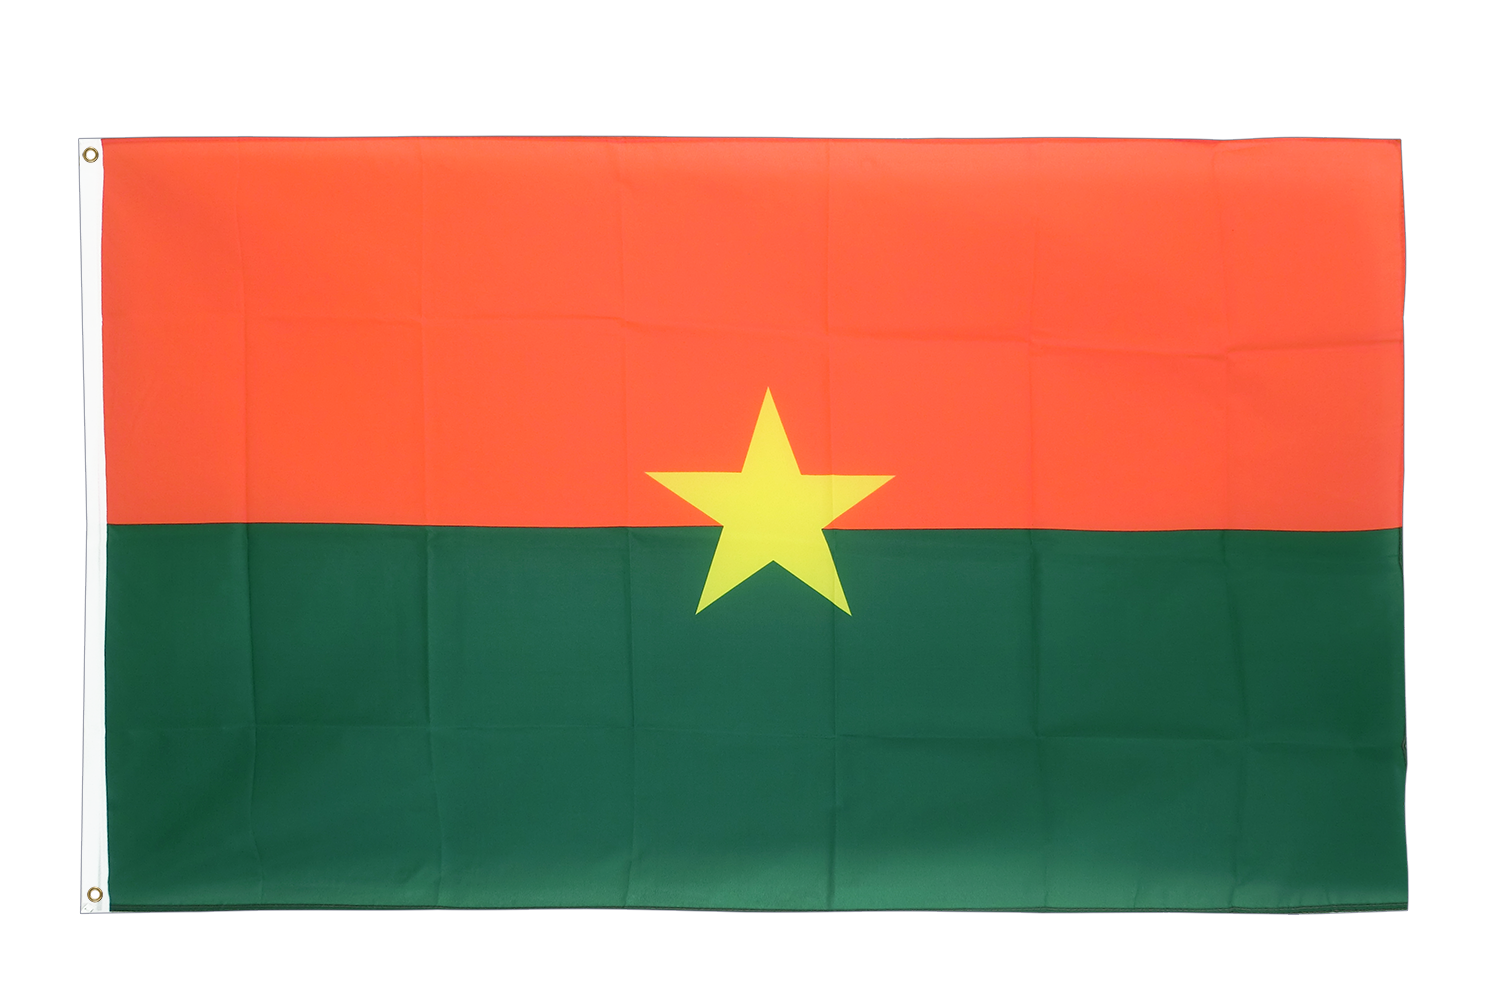 Burkina Faso Wave Flag PNG HD Quality